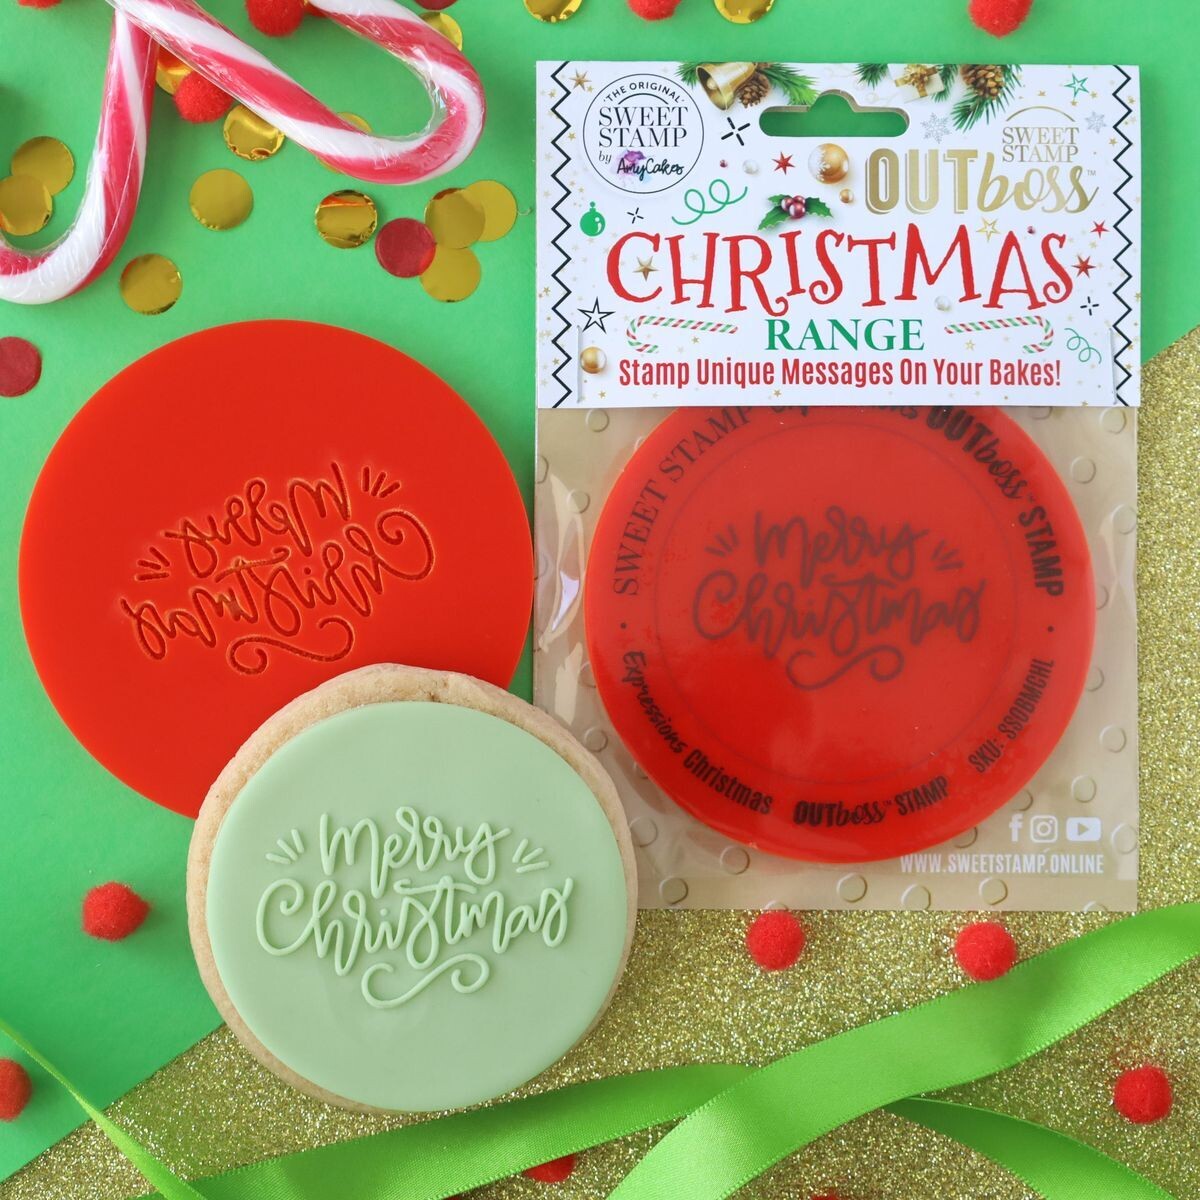 Sweet Stamp -OUTboss Christmas -Elegant 'Merry Christmas' - Χριστουγεννιάτικη Σφραγίδα 'Merry Christmas'